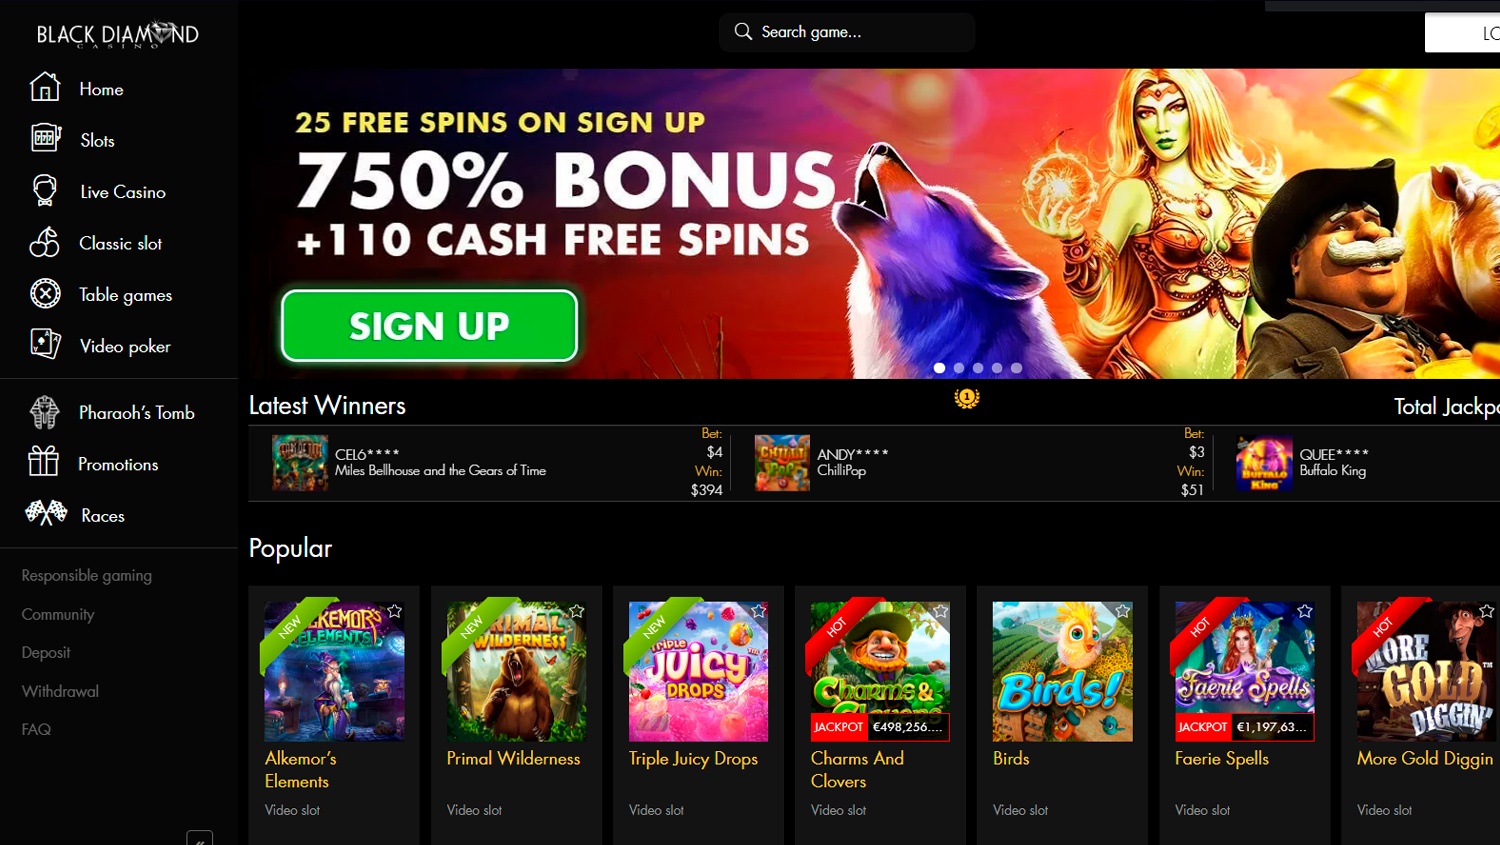 Black Diamond casino screenshot of main page